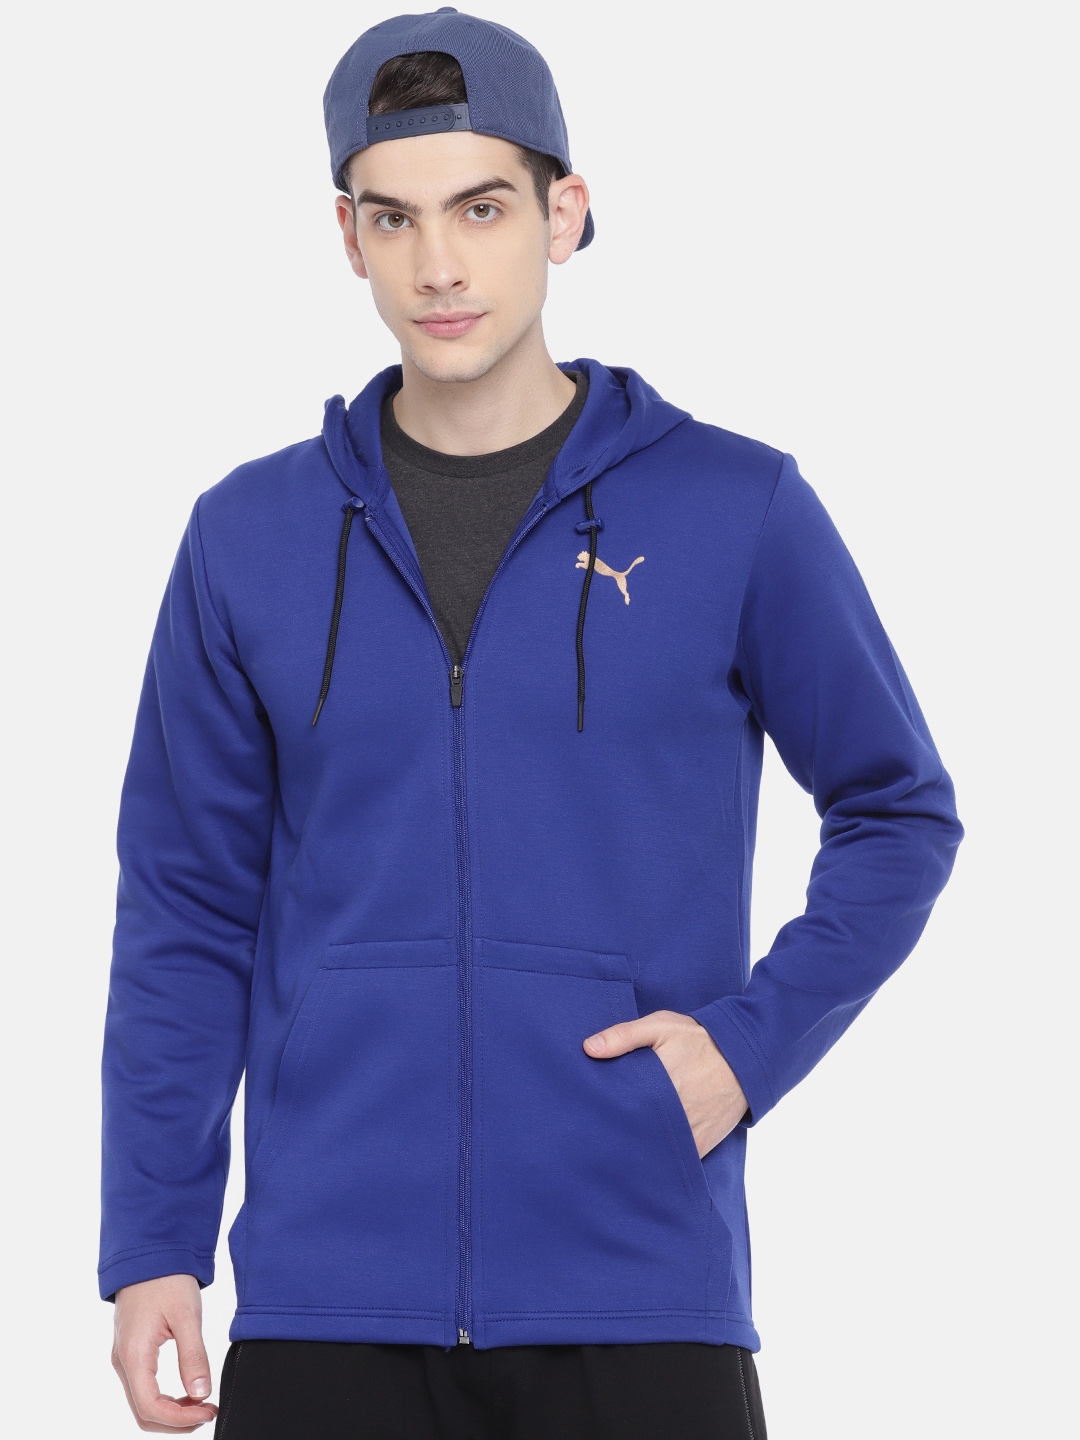 puma blue hooded sweatshirt